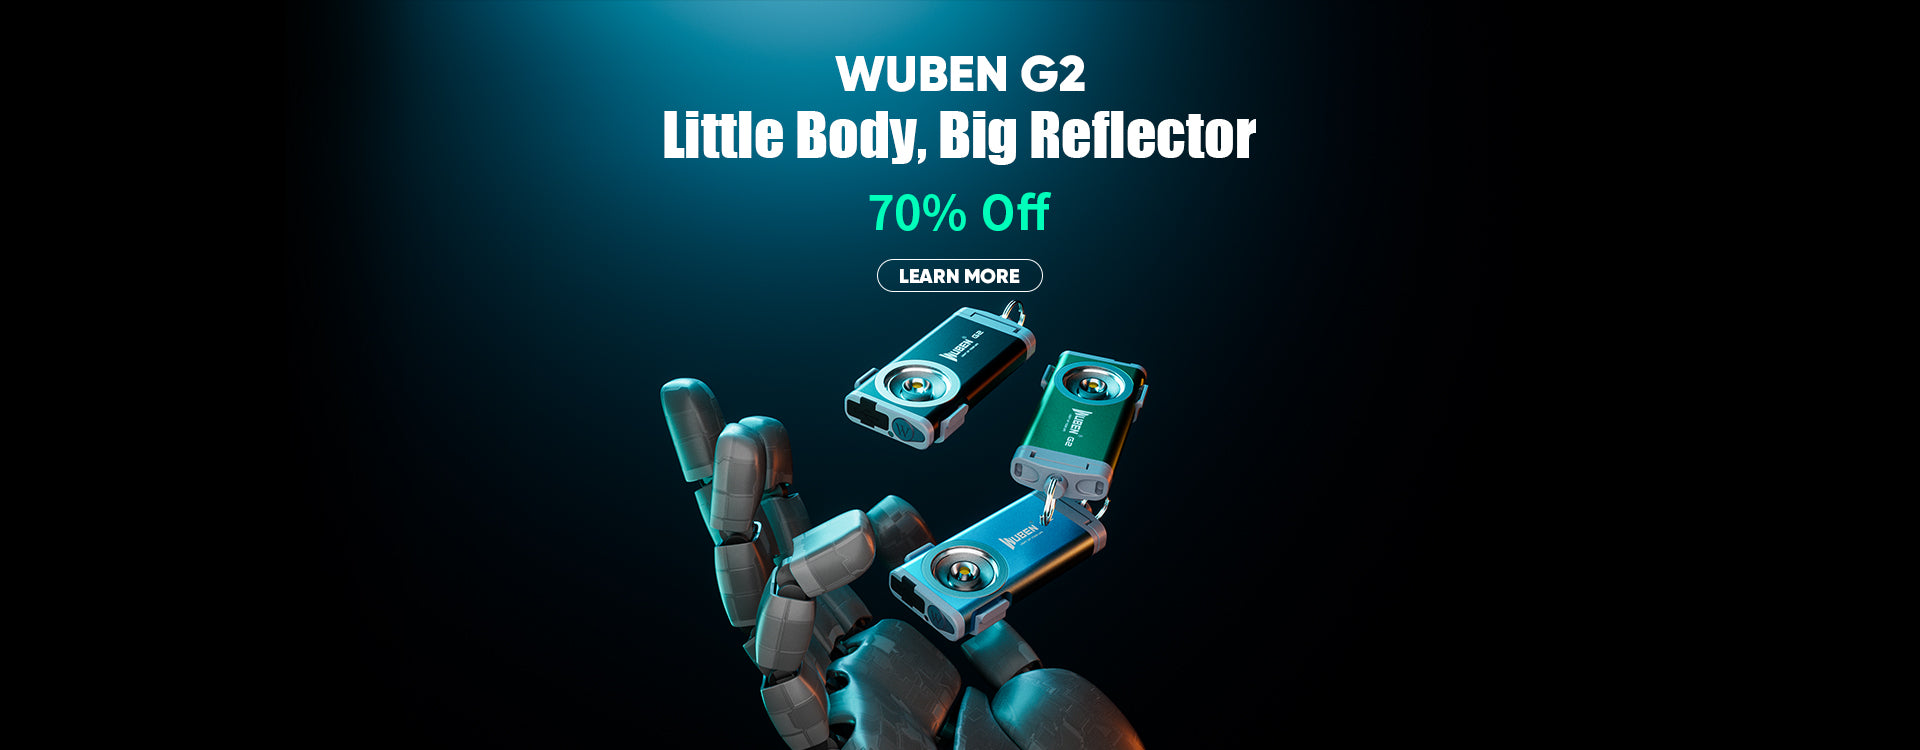 wuben G2 up to 70% off